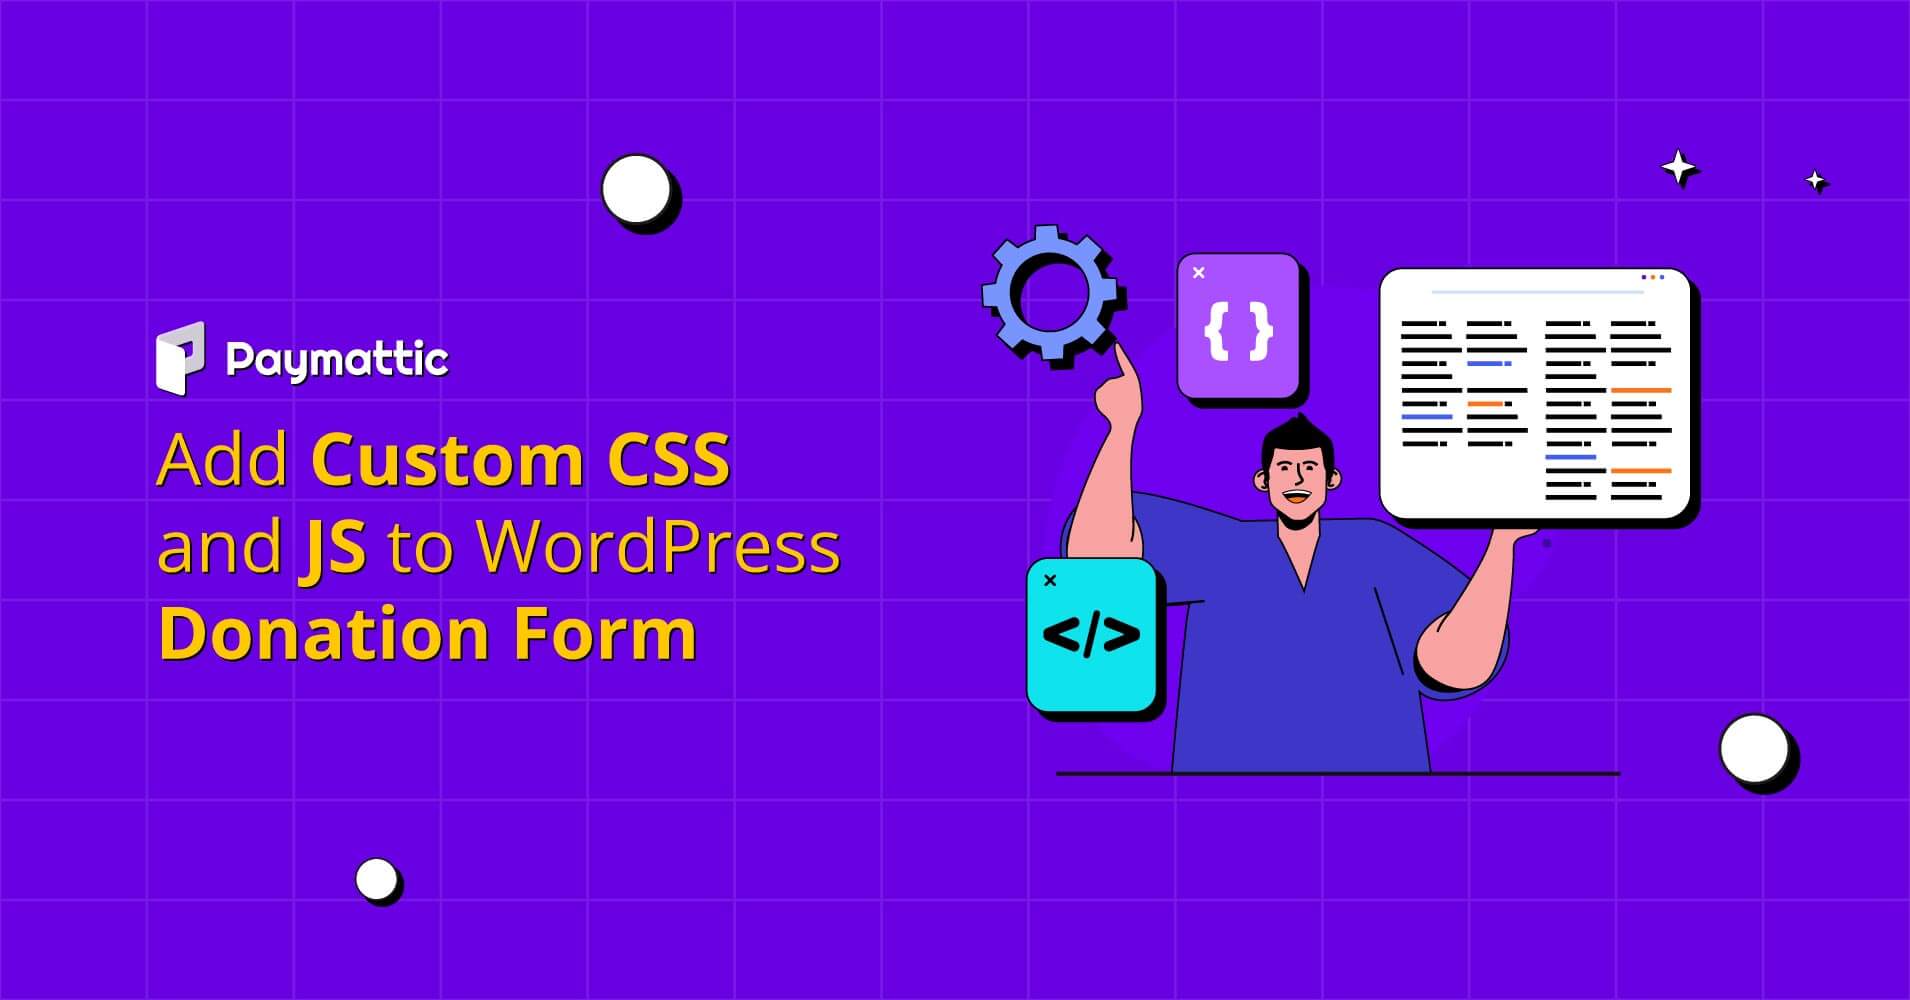 Add-Custom-CSS-and-JS-to-WordPress-Donation-Form-1.jpg